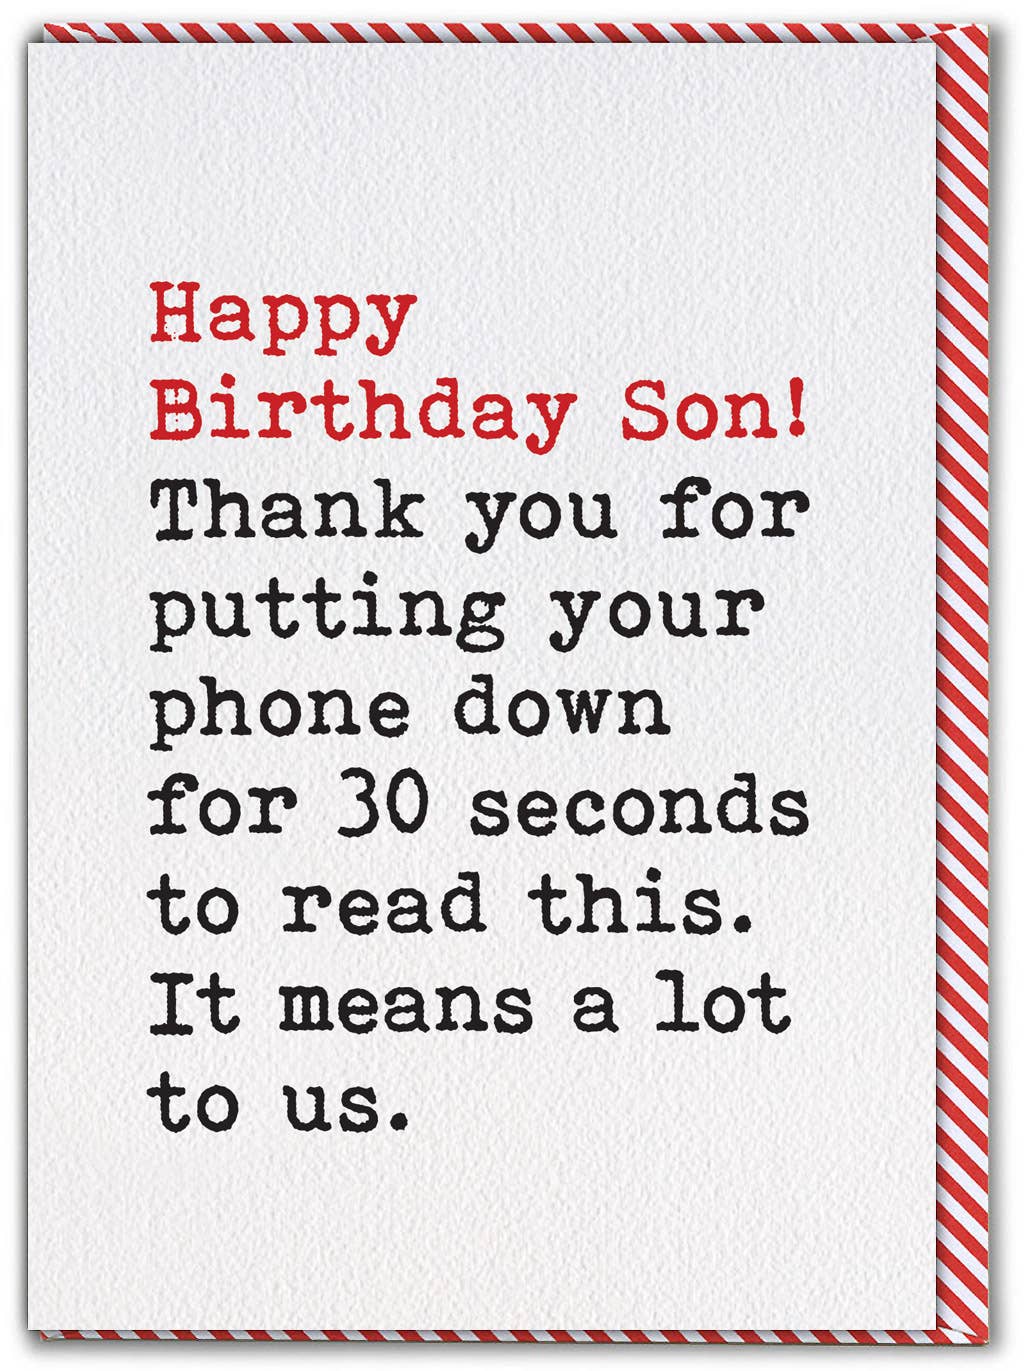 Son Birthday Card - Phone Down